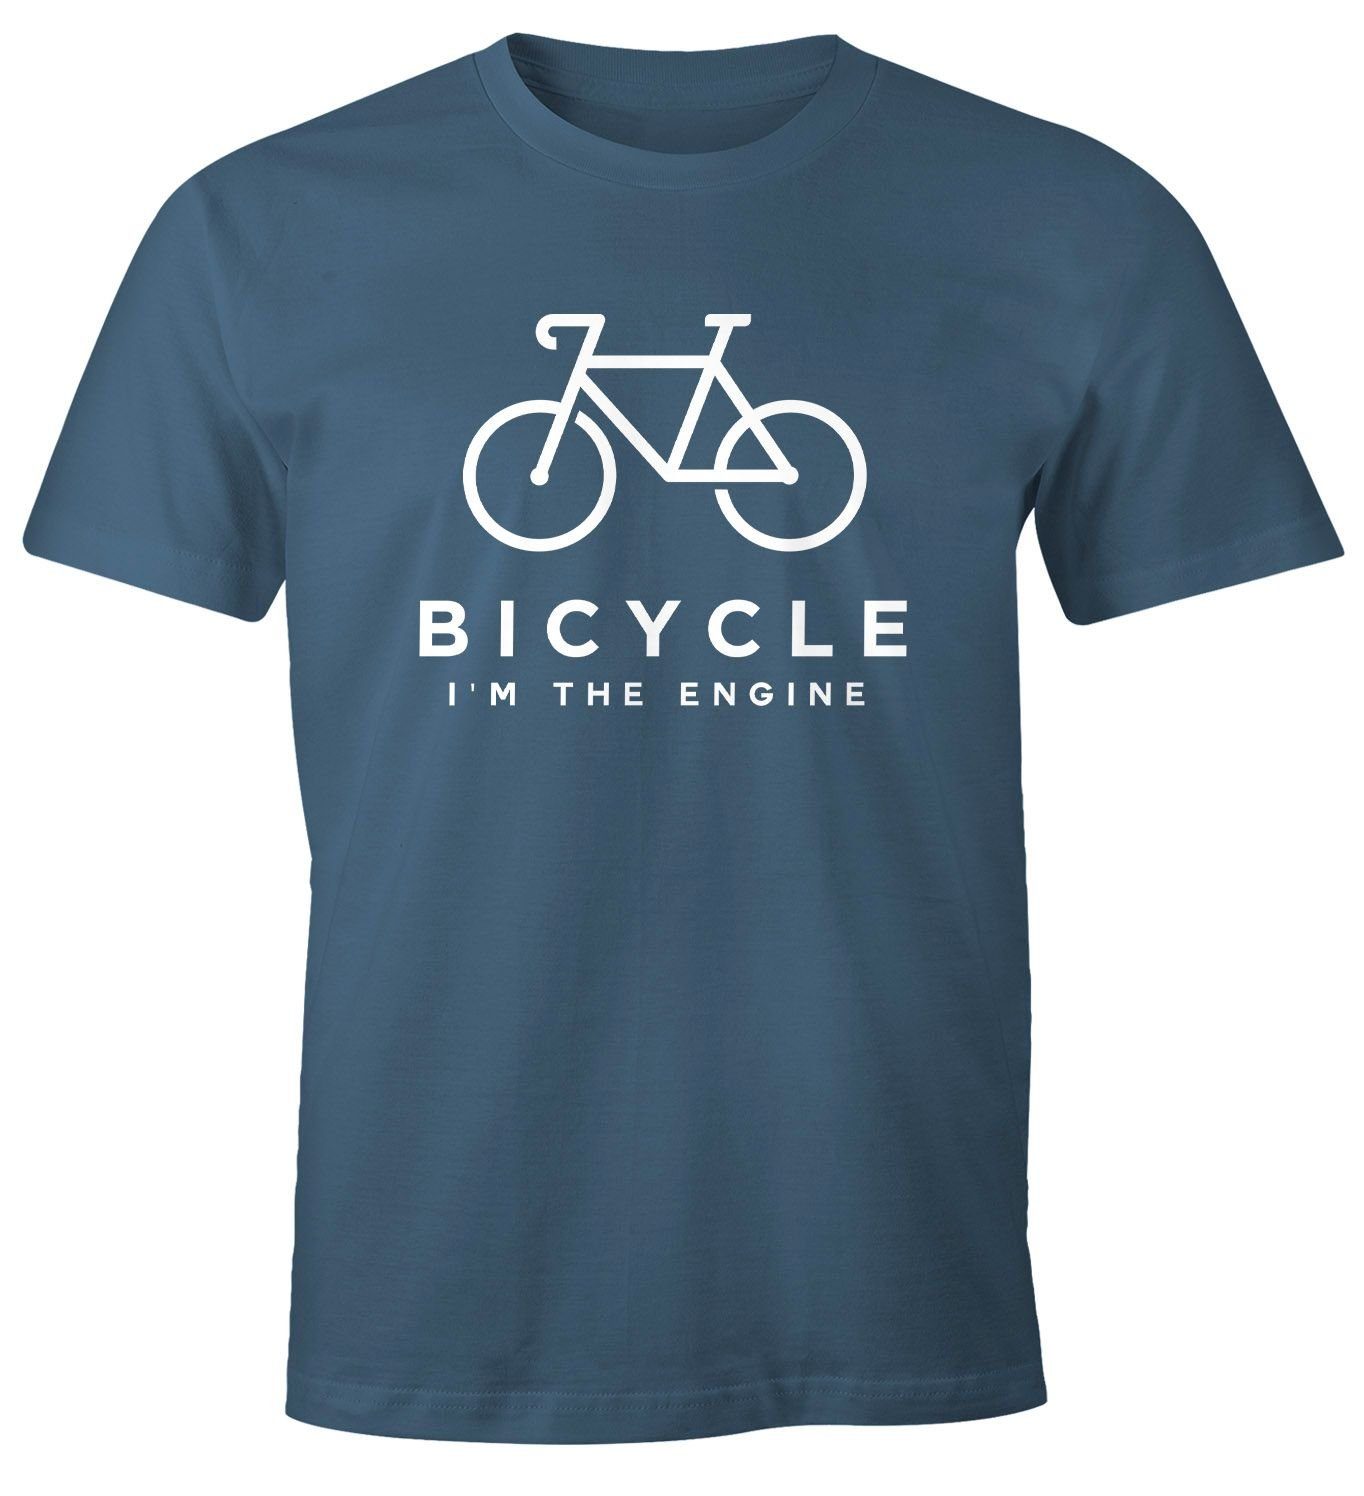 MoonWorks Print-Shirt Herren T-Shirt Fahrrad Sprüche Bicycle I'm the Engine  Bike Rad Fun-Shirt Spruch lustig Moonworks® mit Print